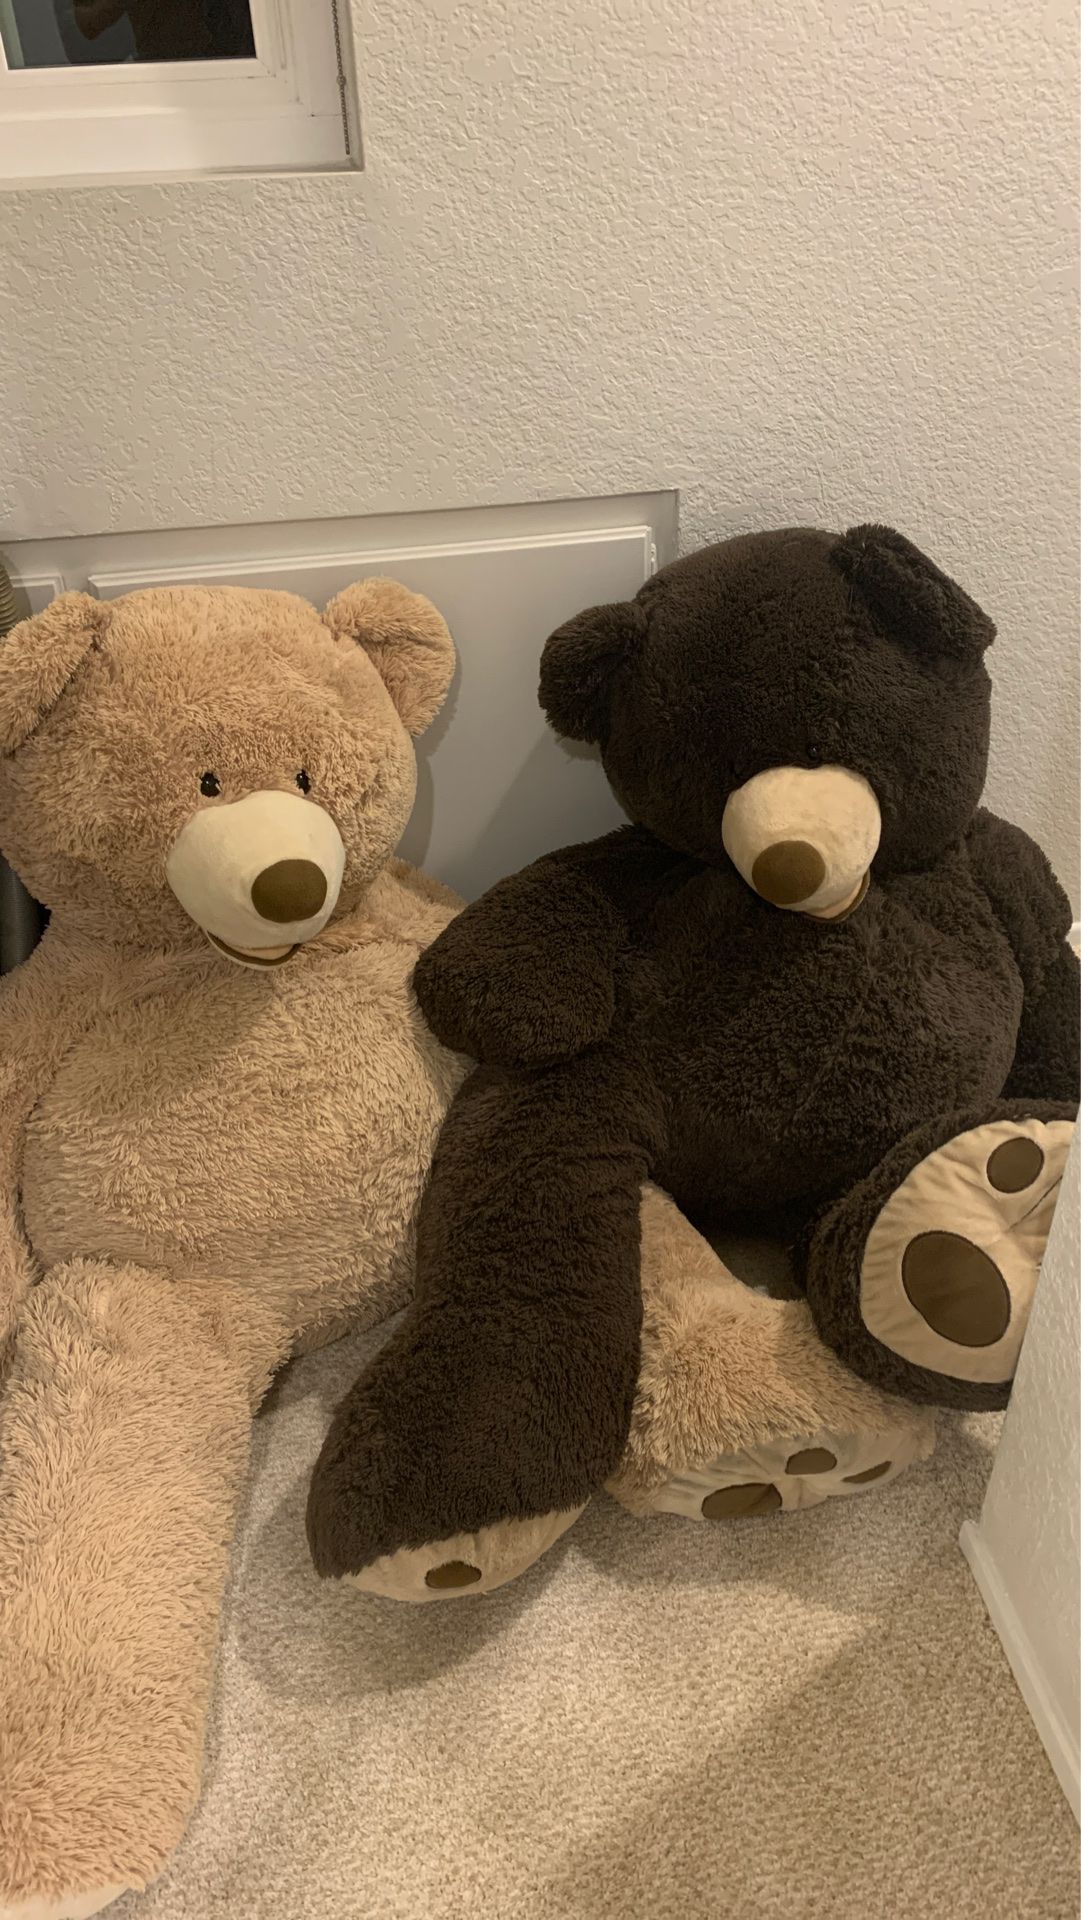 Life size stuffed teddy bears